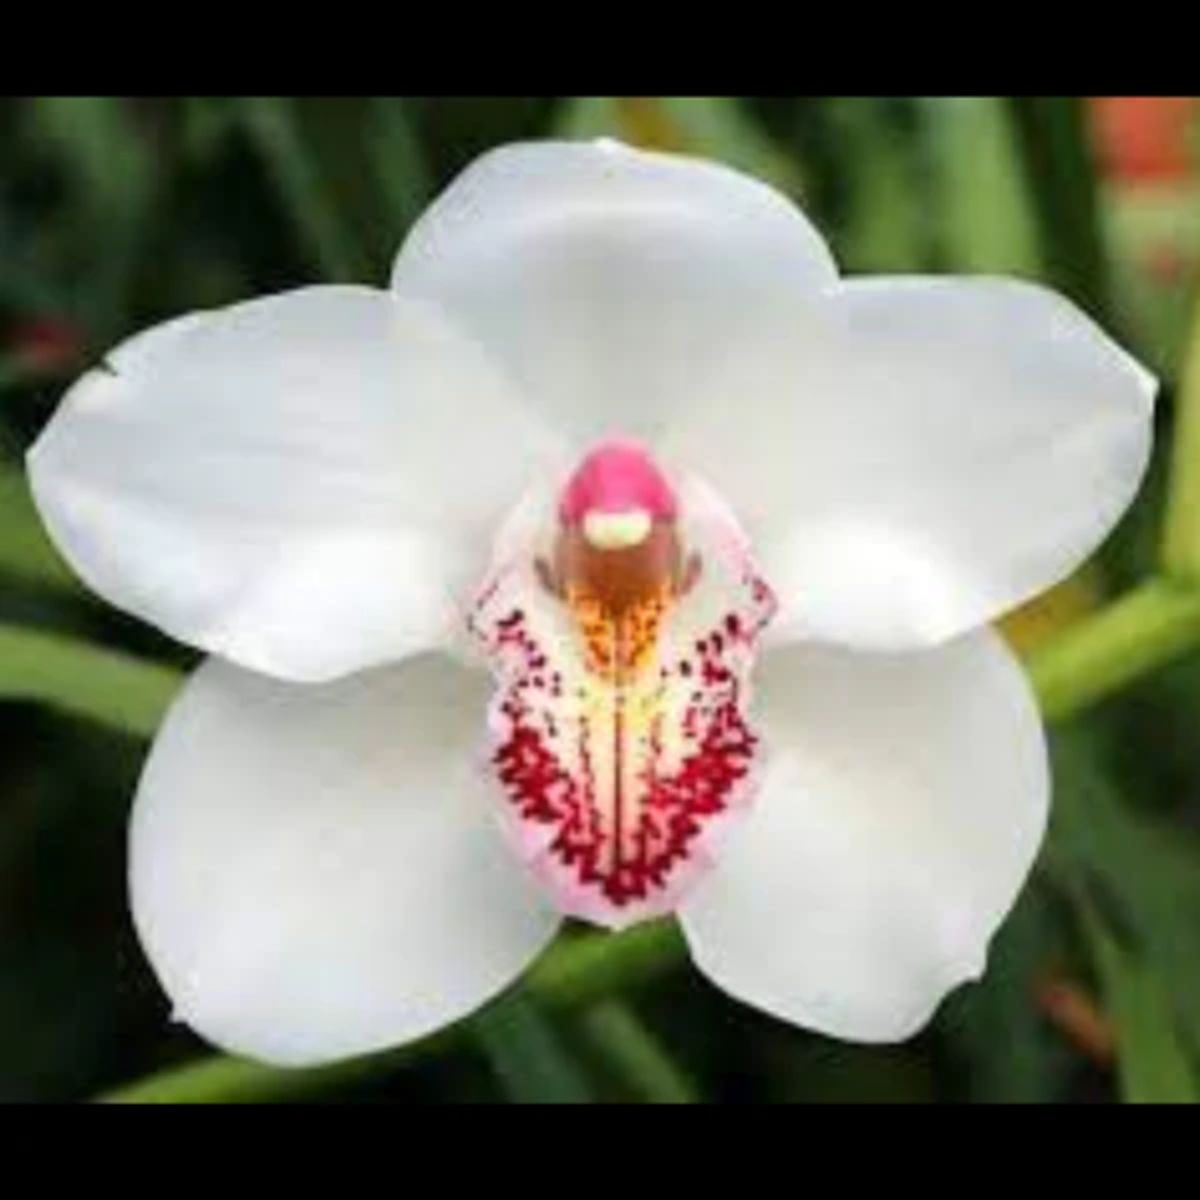 Cymbidium Kulnara Cherish Flask Orchid with White Blooms and Unique Flask-Shaped Lip